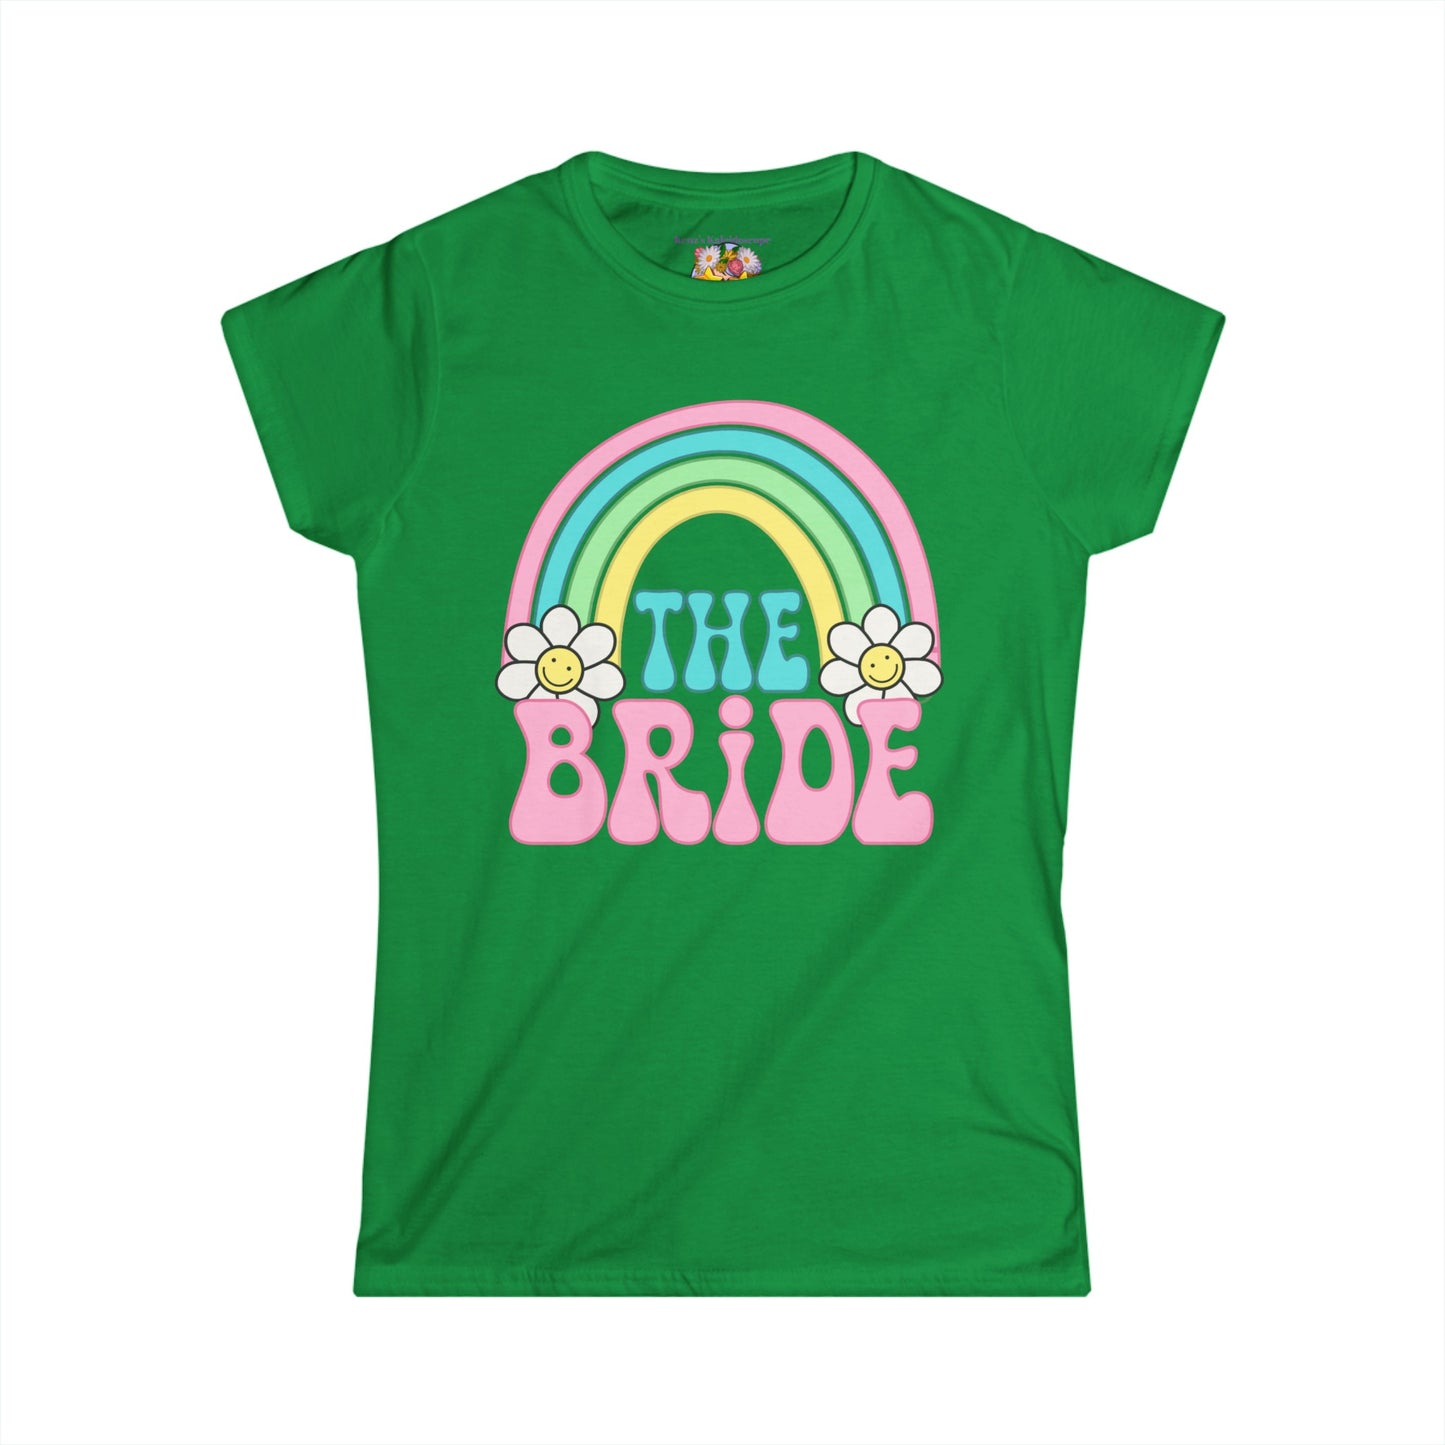 The Bride Retro Rainbow, S-2XL, Women's Softstyle Tee